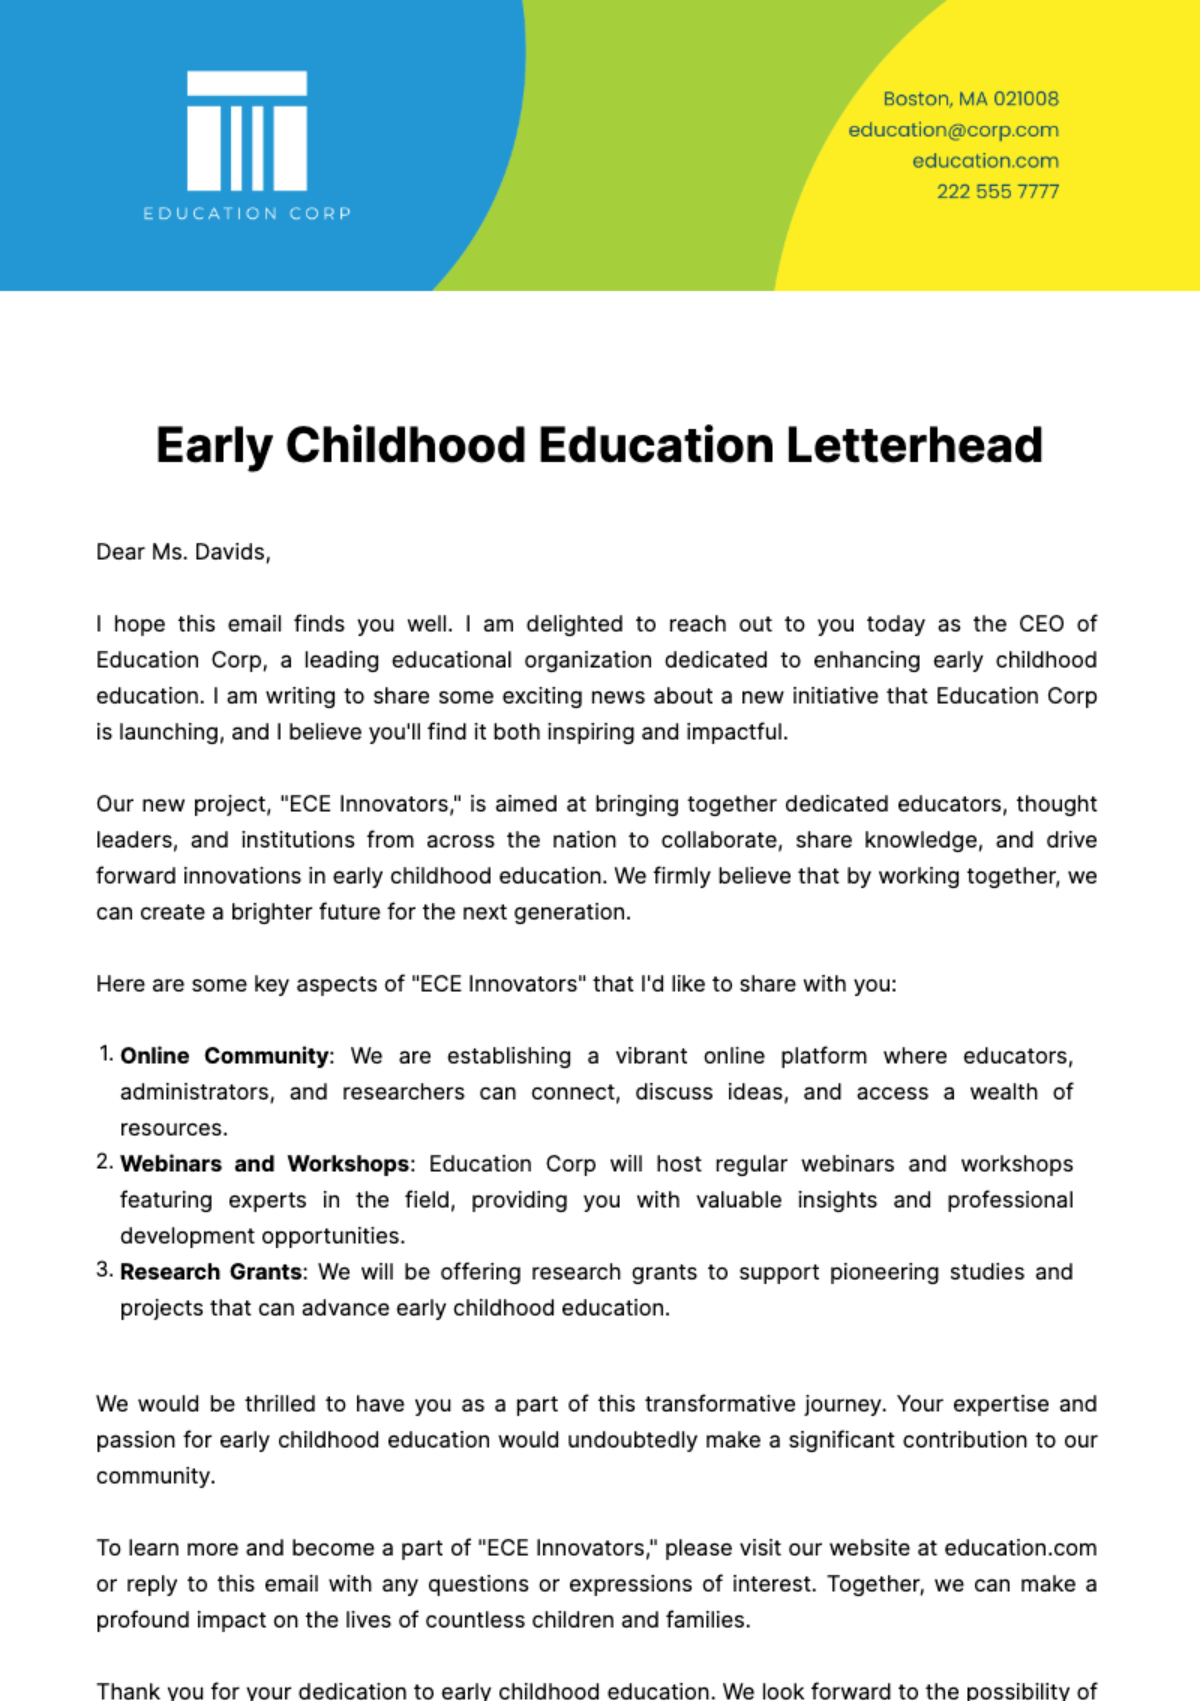 Early Childhood Education Letterhead Template